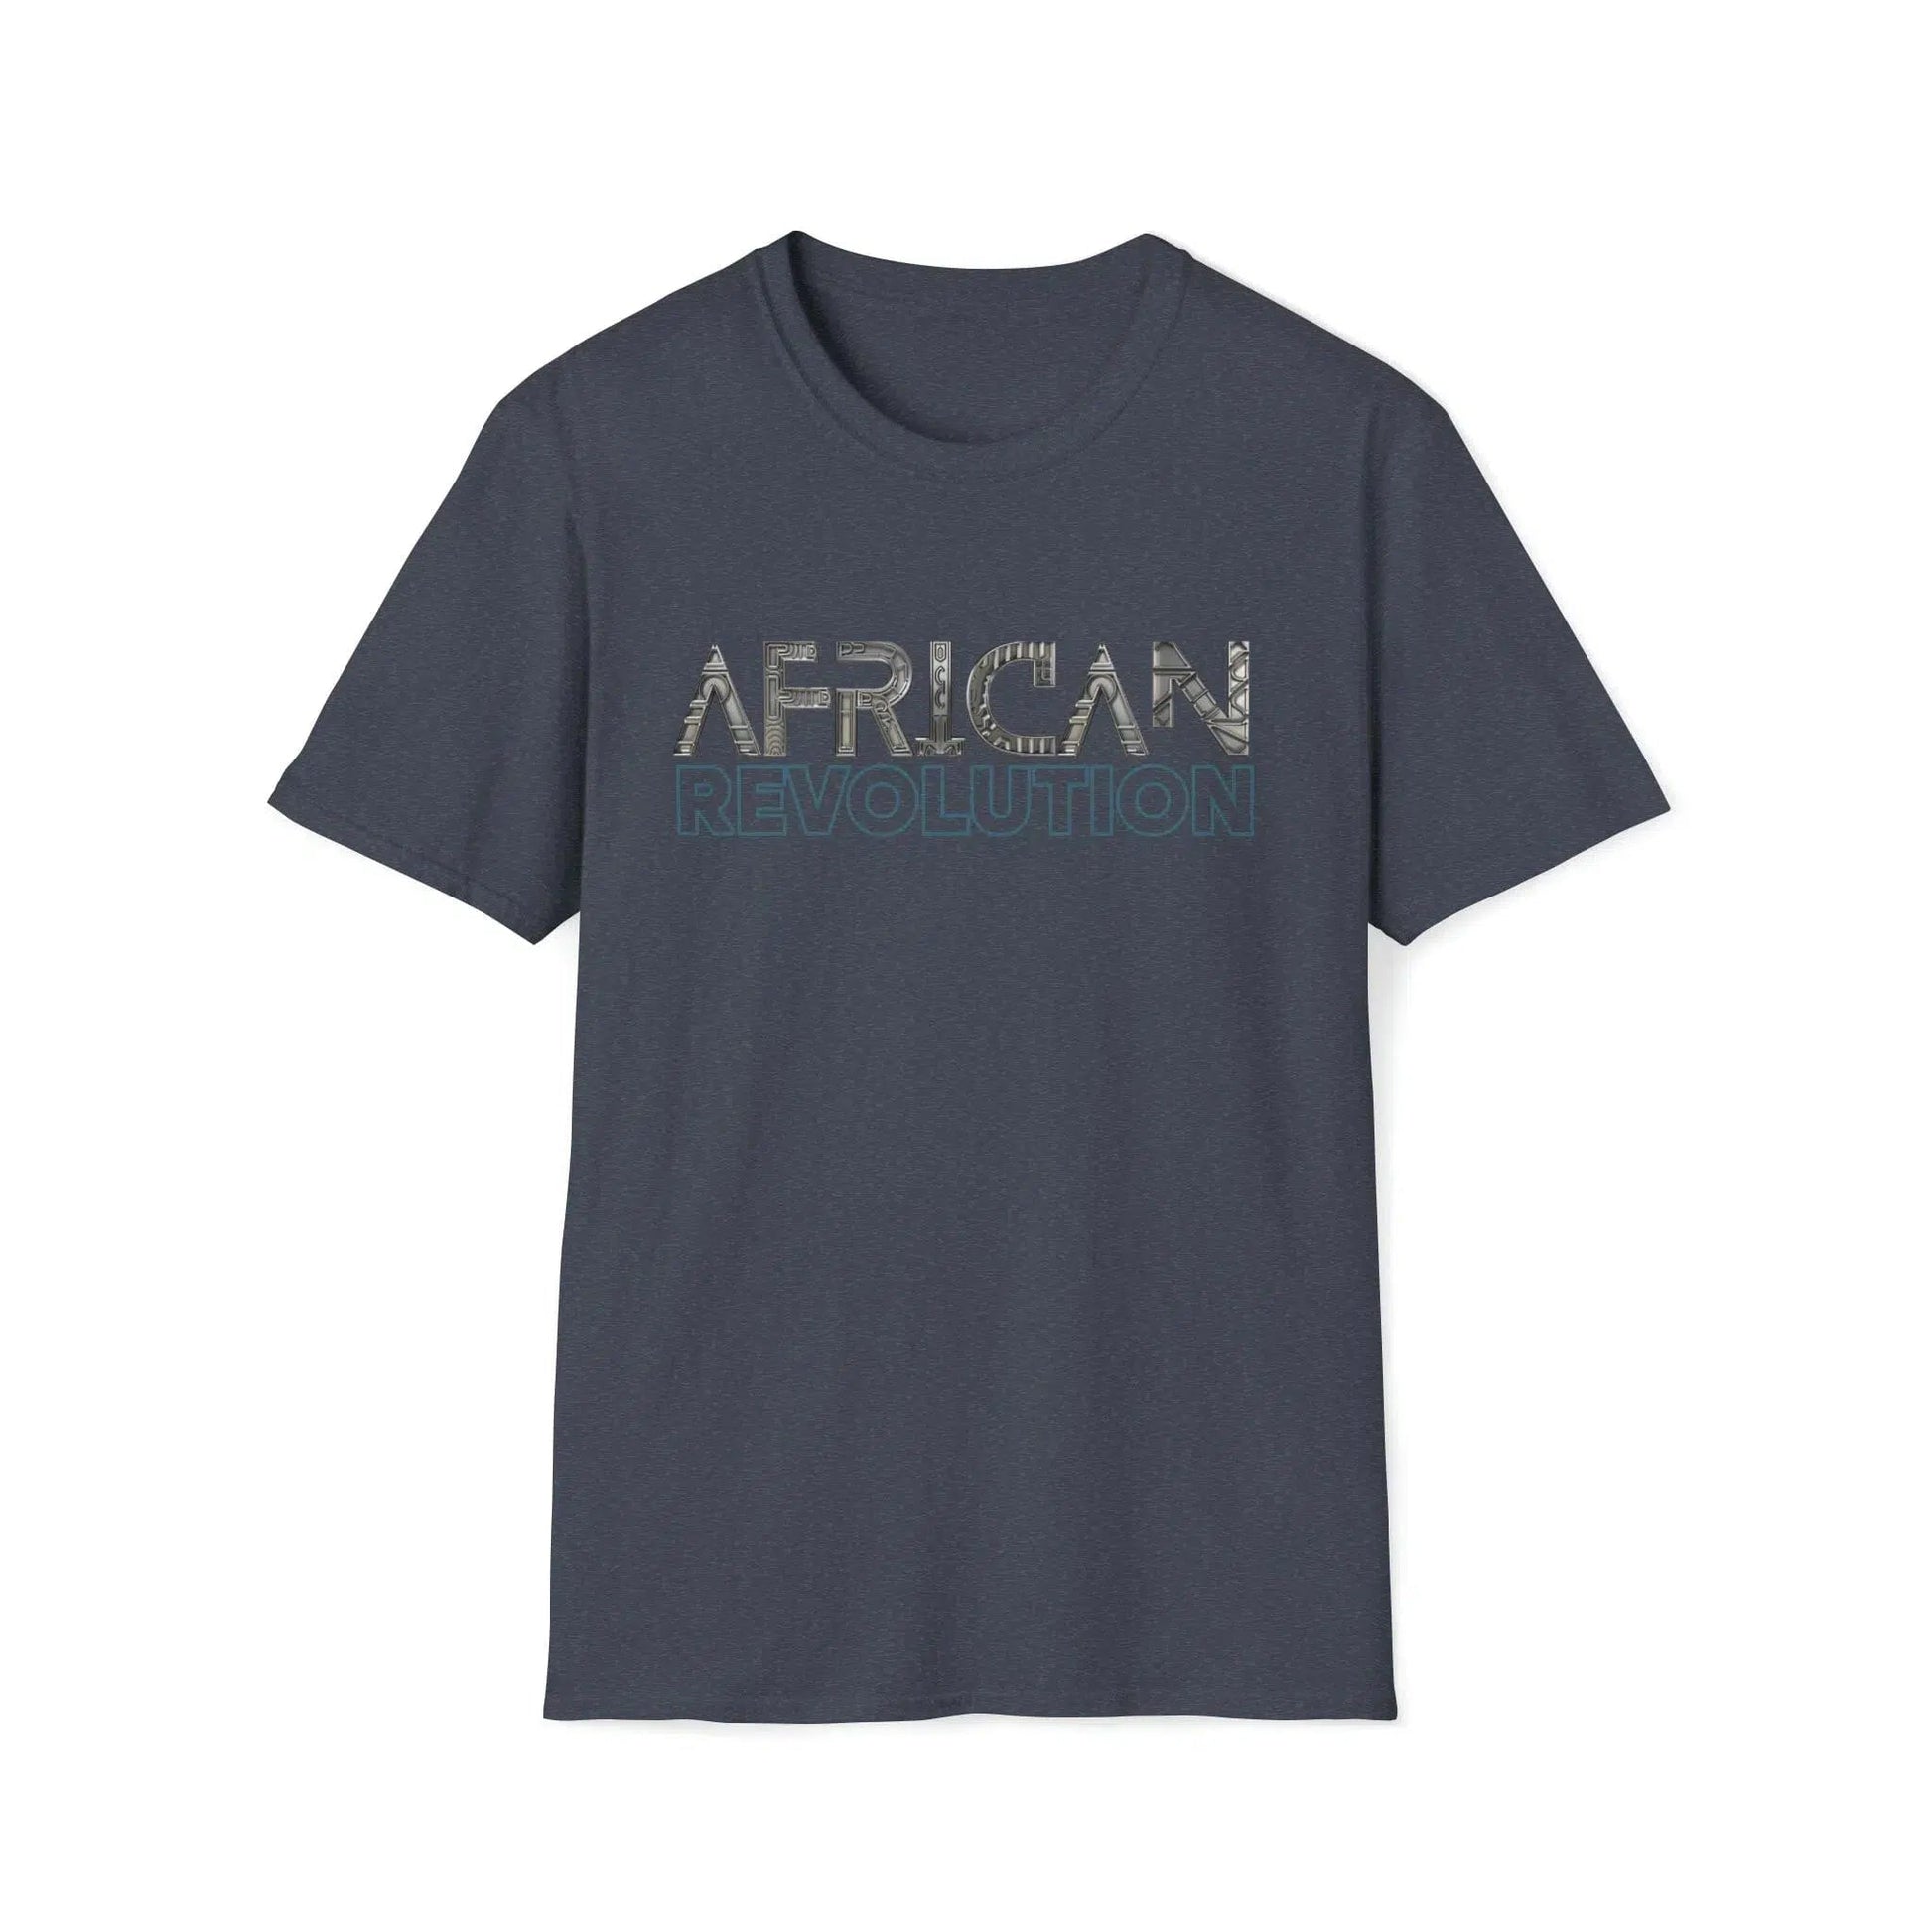 Black empowerment pride tee shirts African Revolution